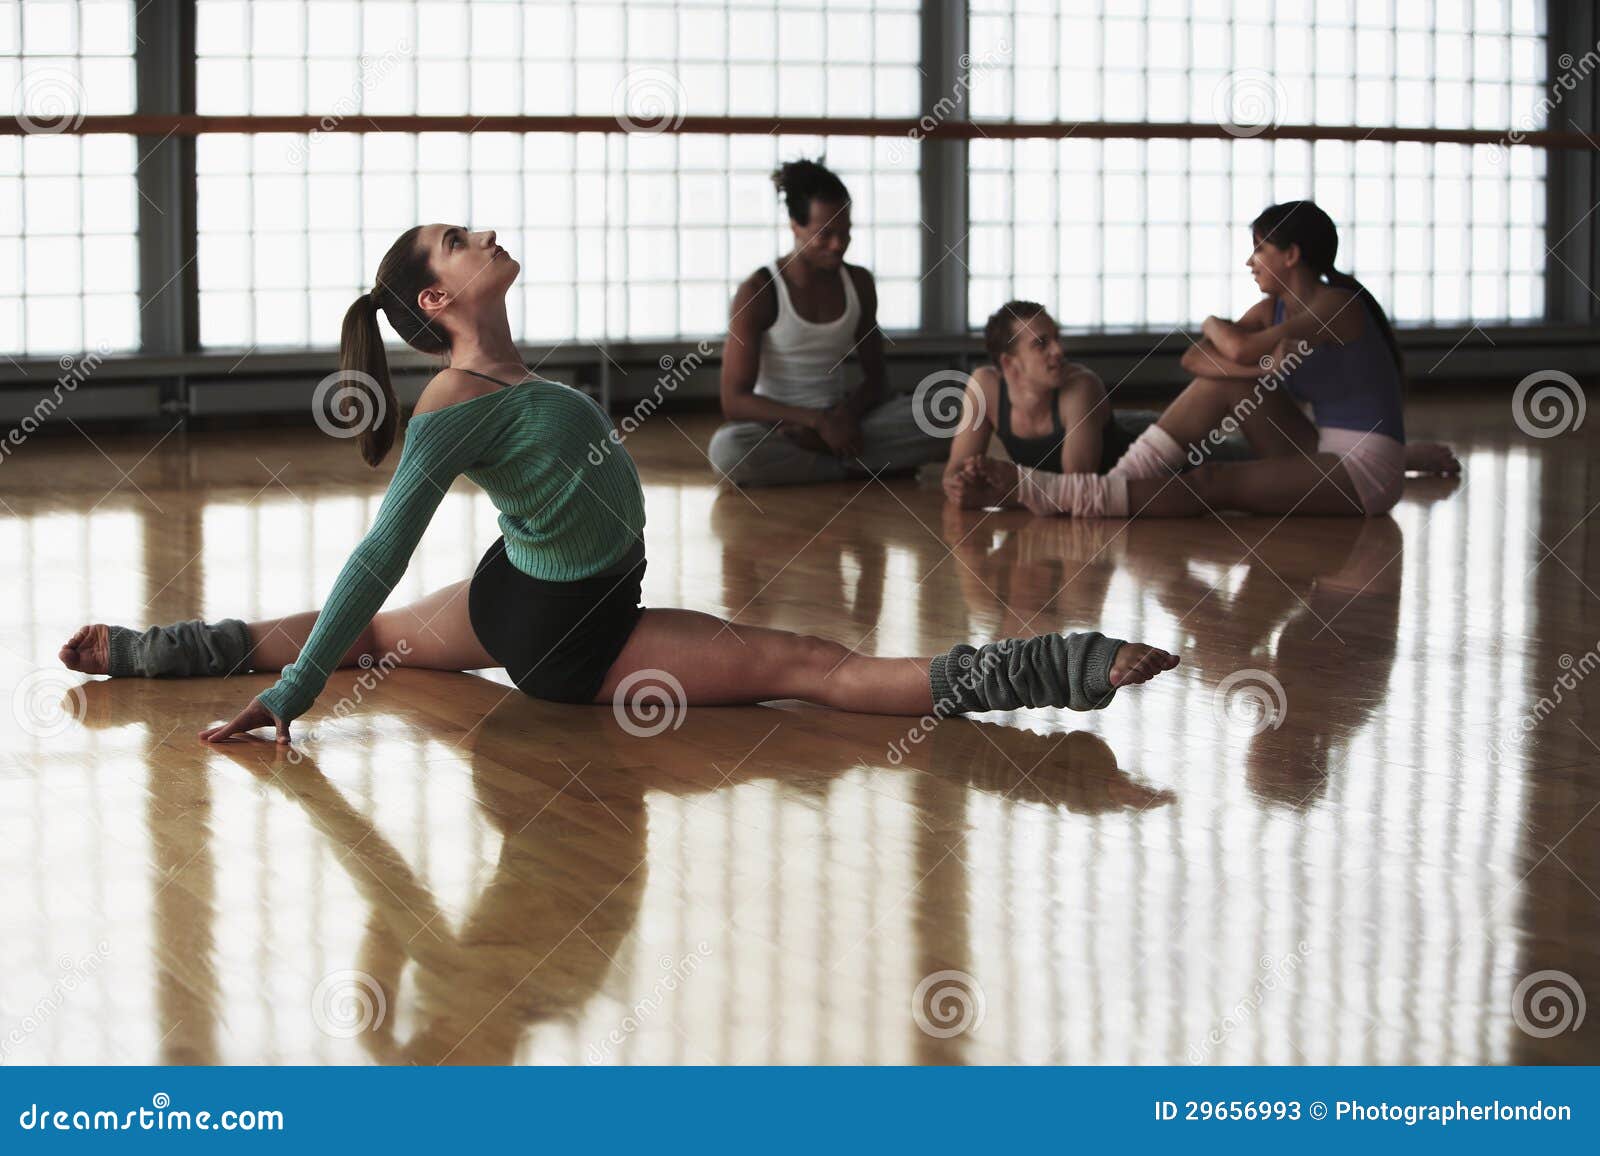 female practicing aerobics